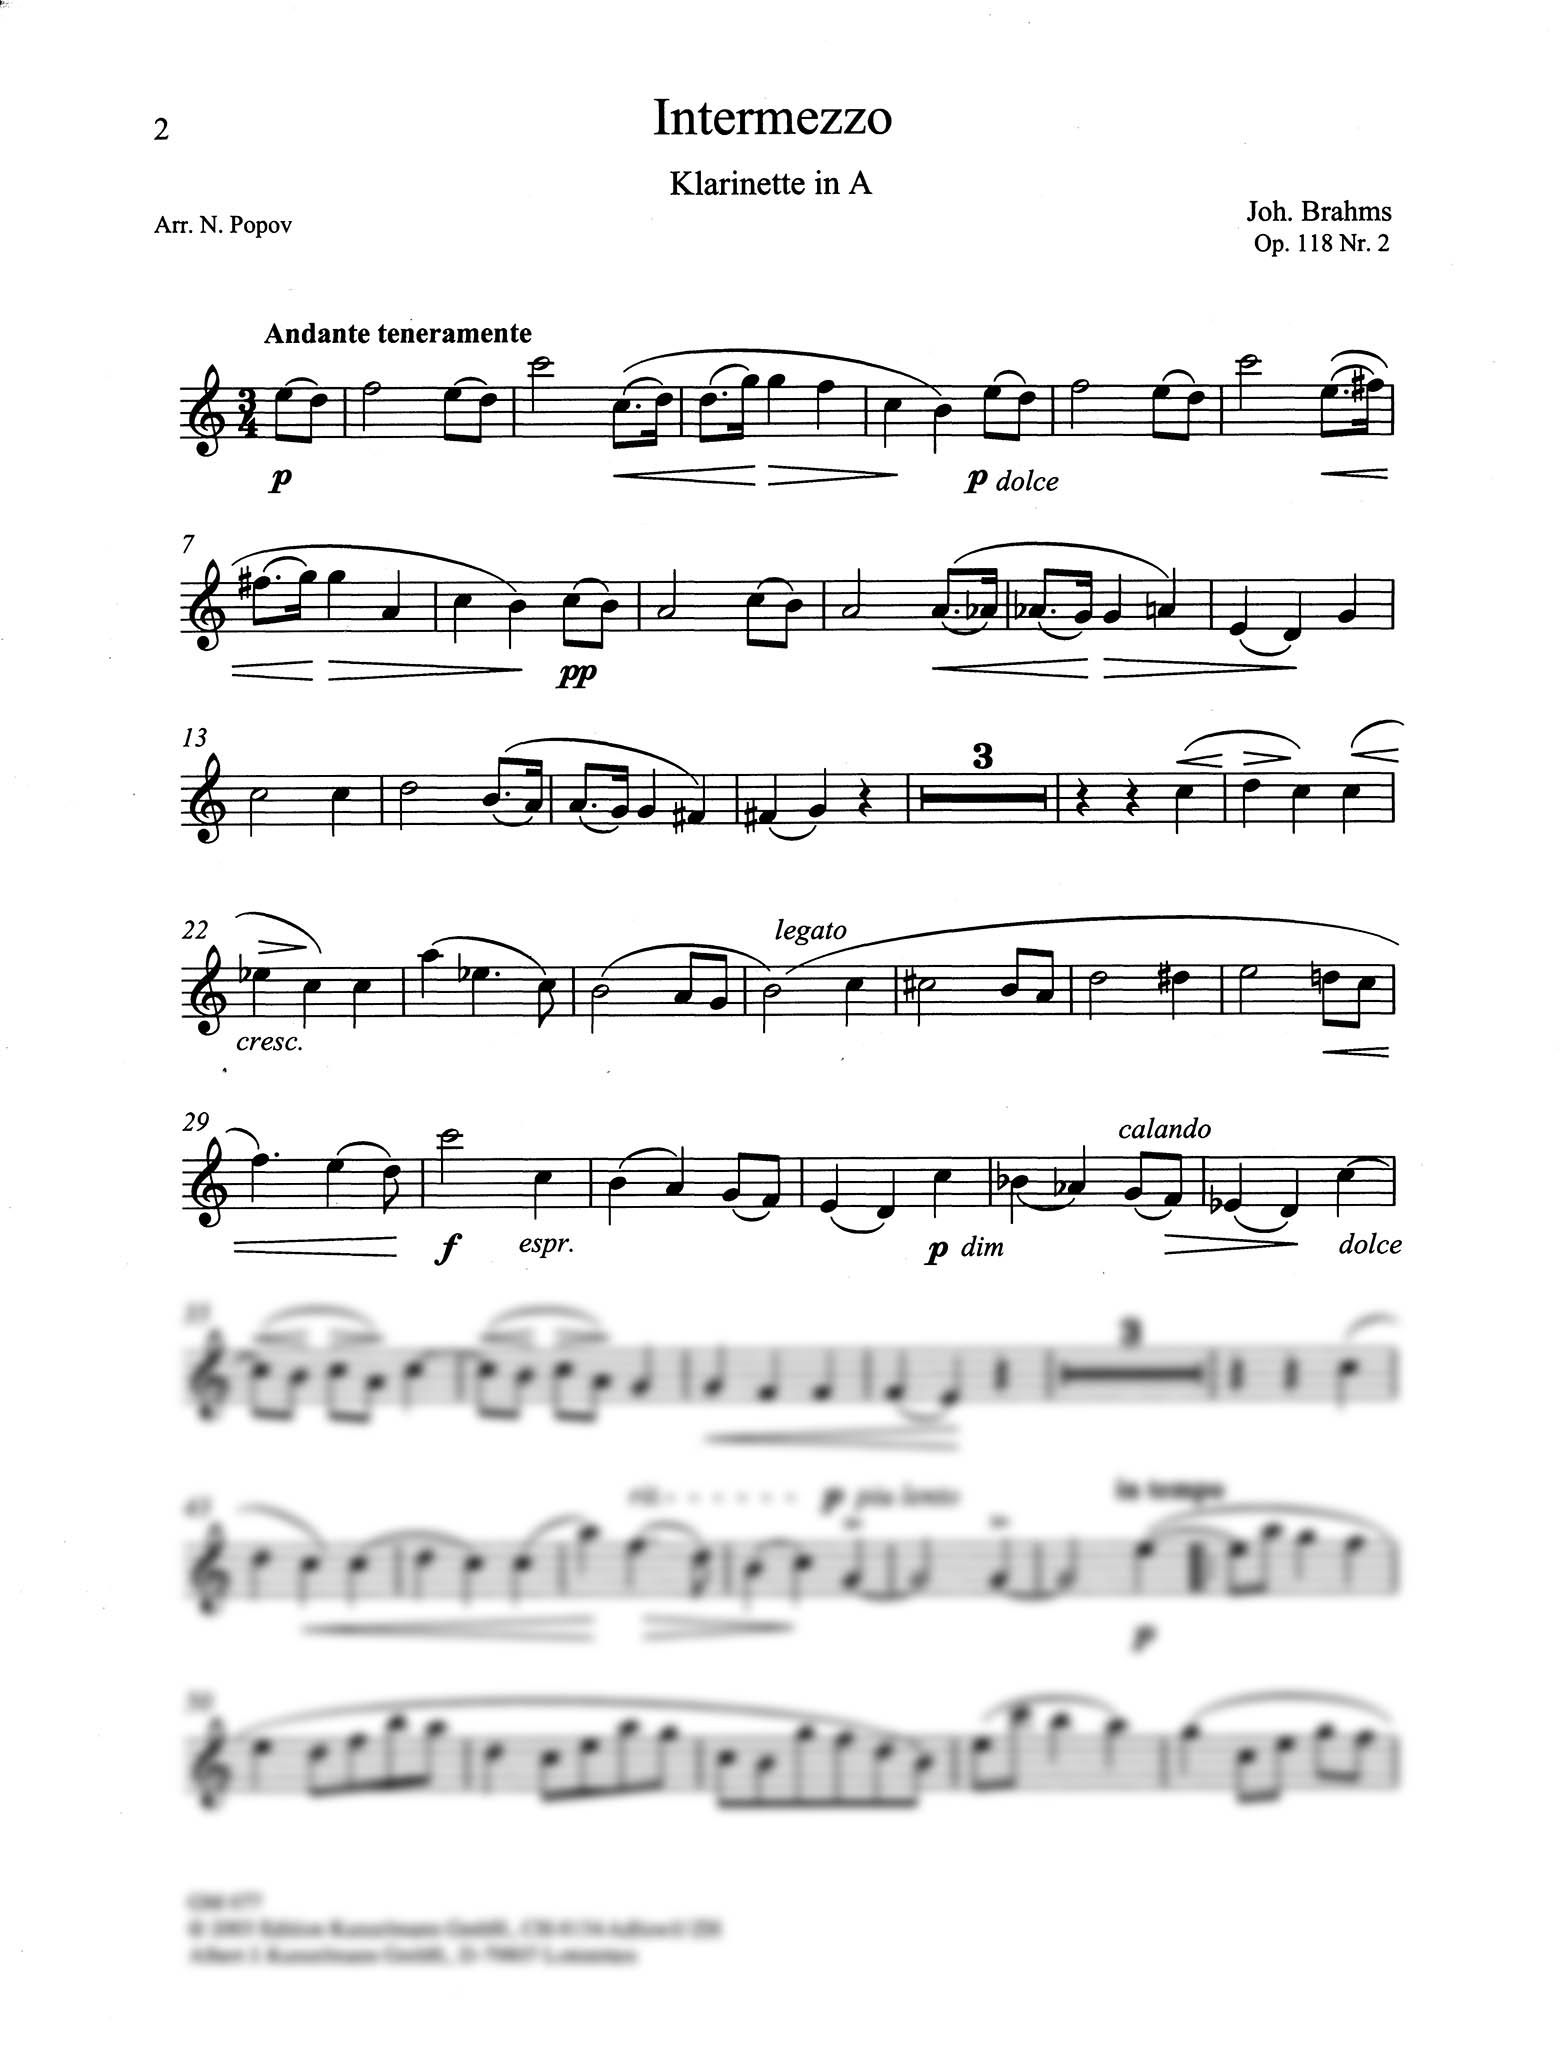 Intermezzo, Op. 118 No. 2 Clarinet part